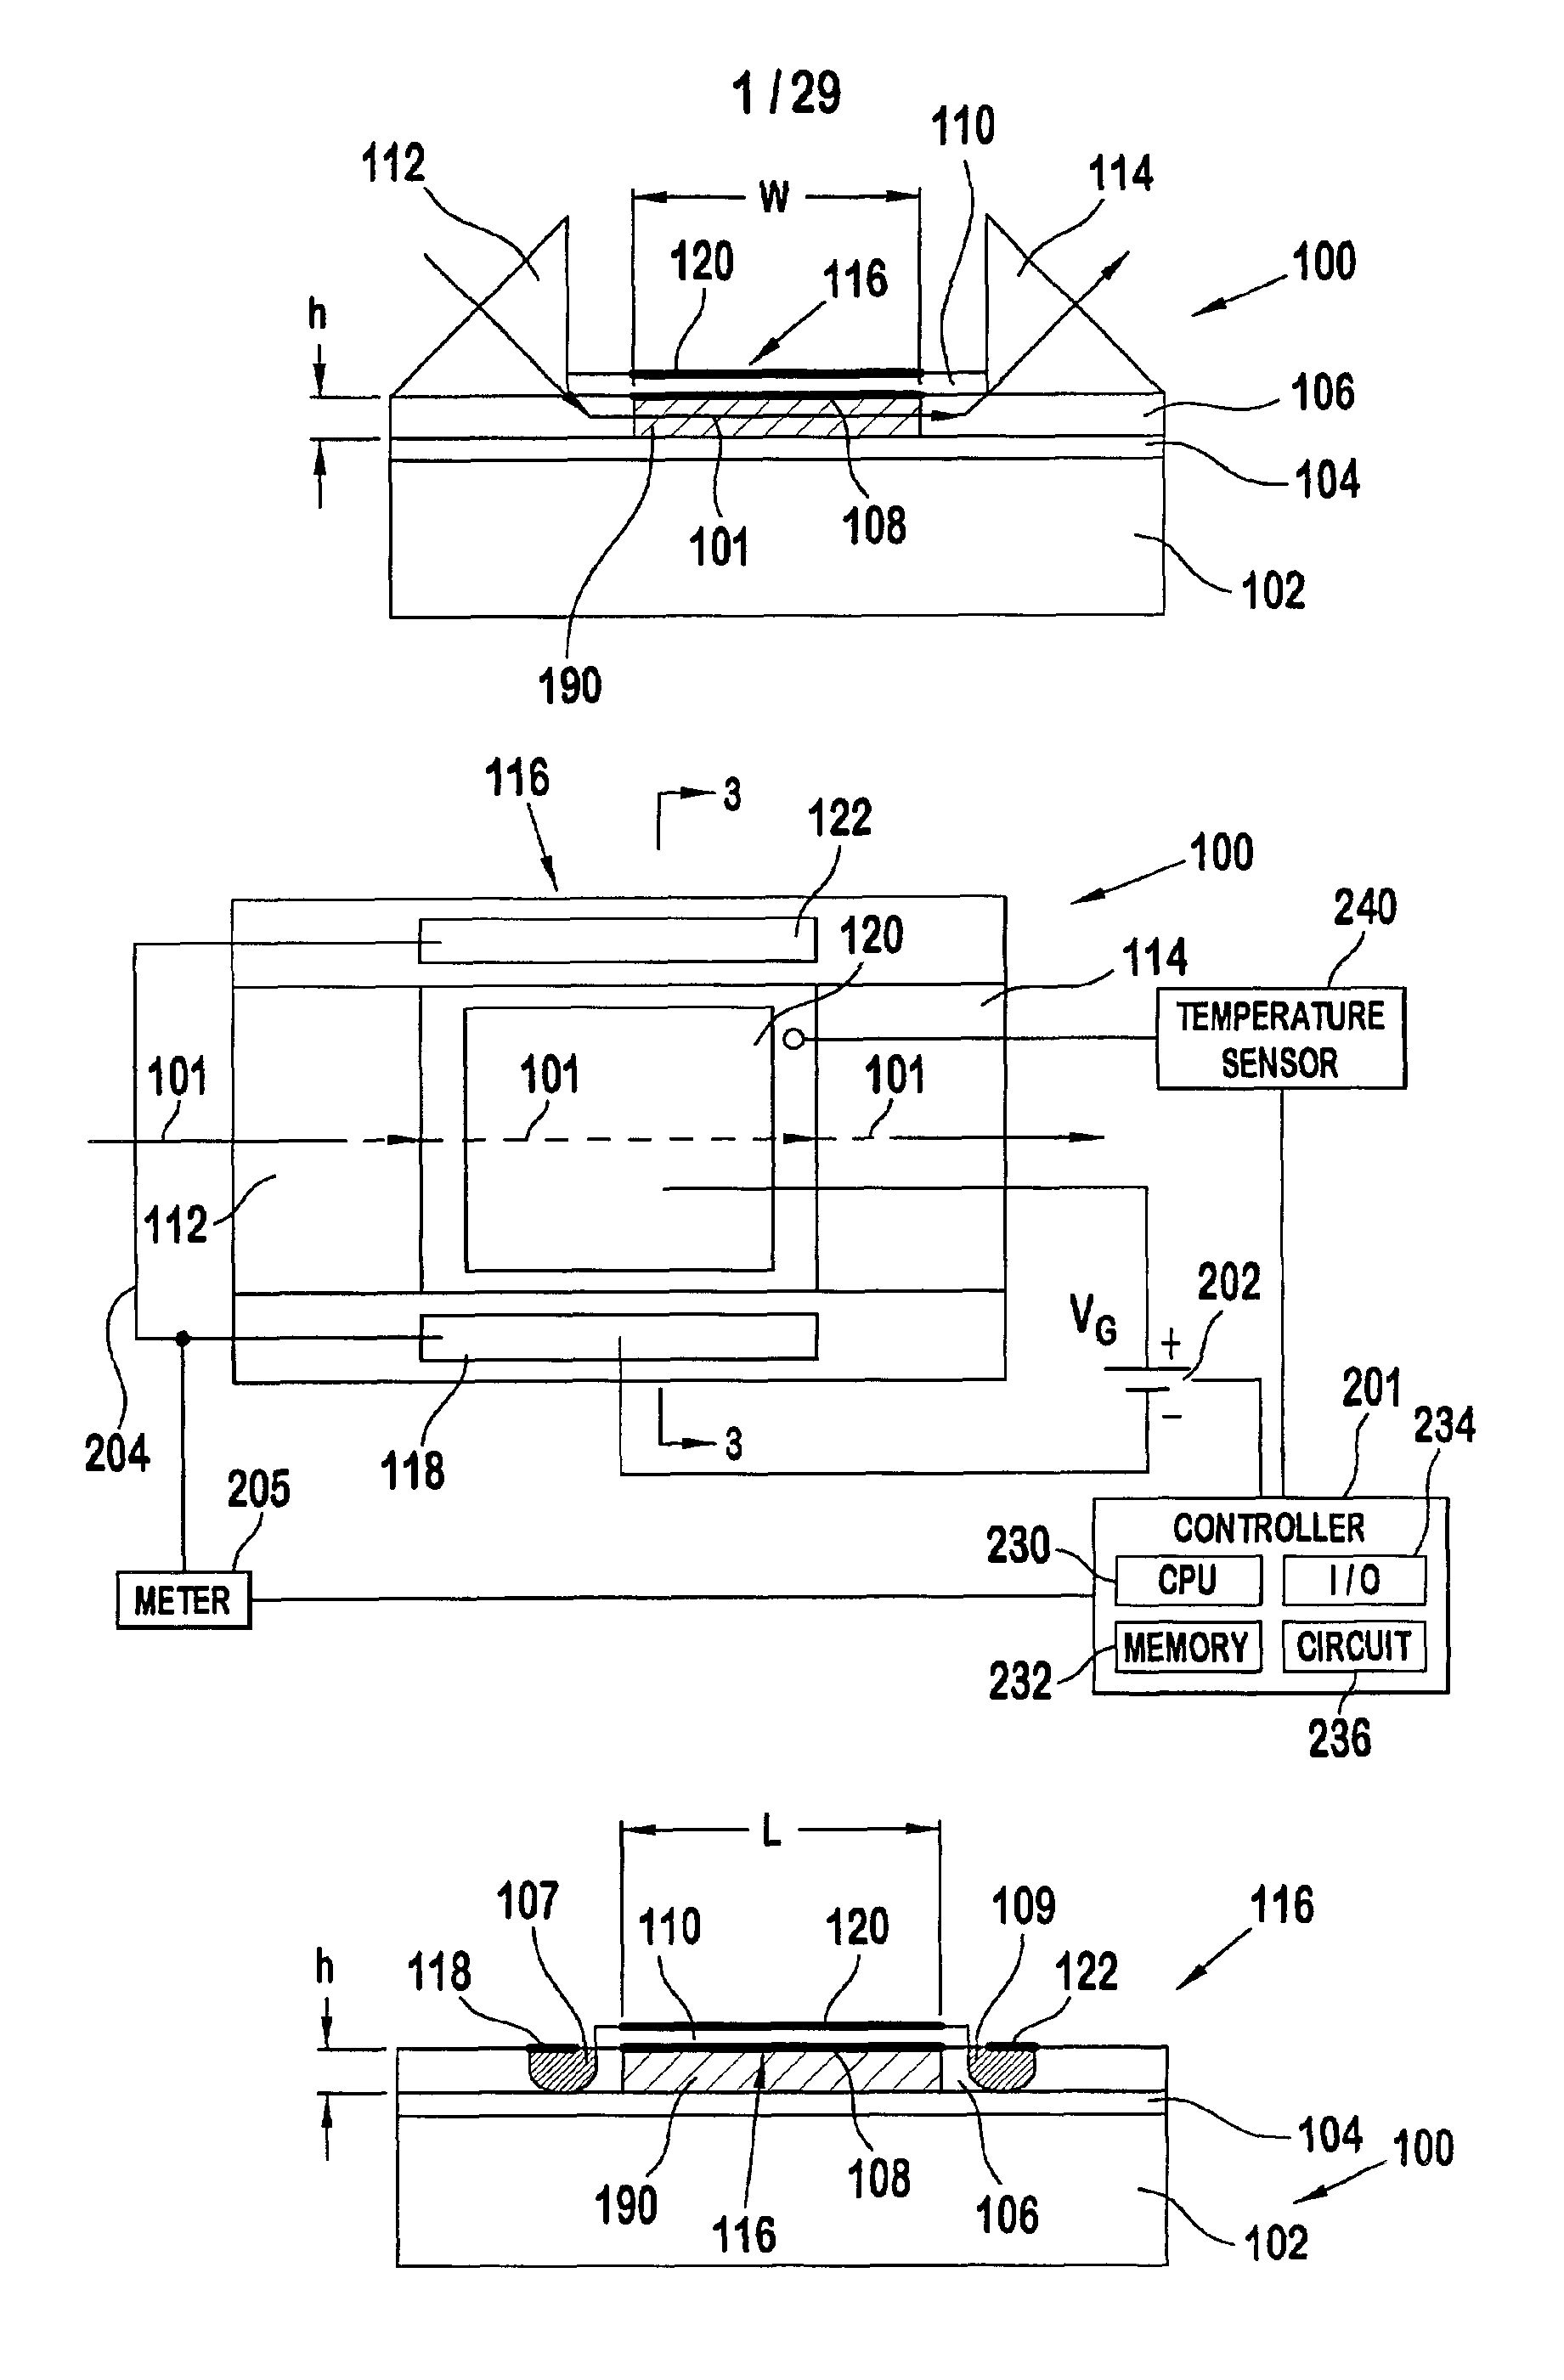 Optical lens apparatus and associated method